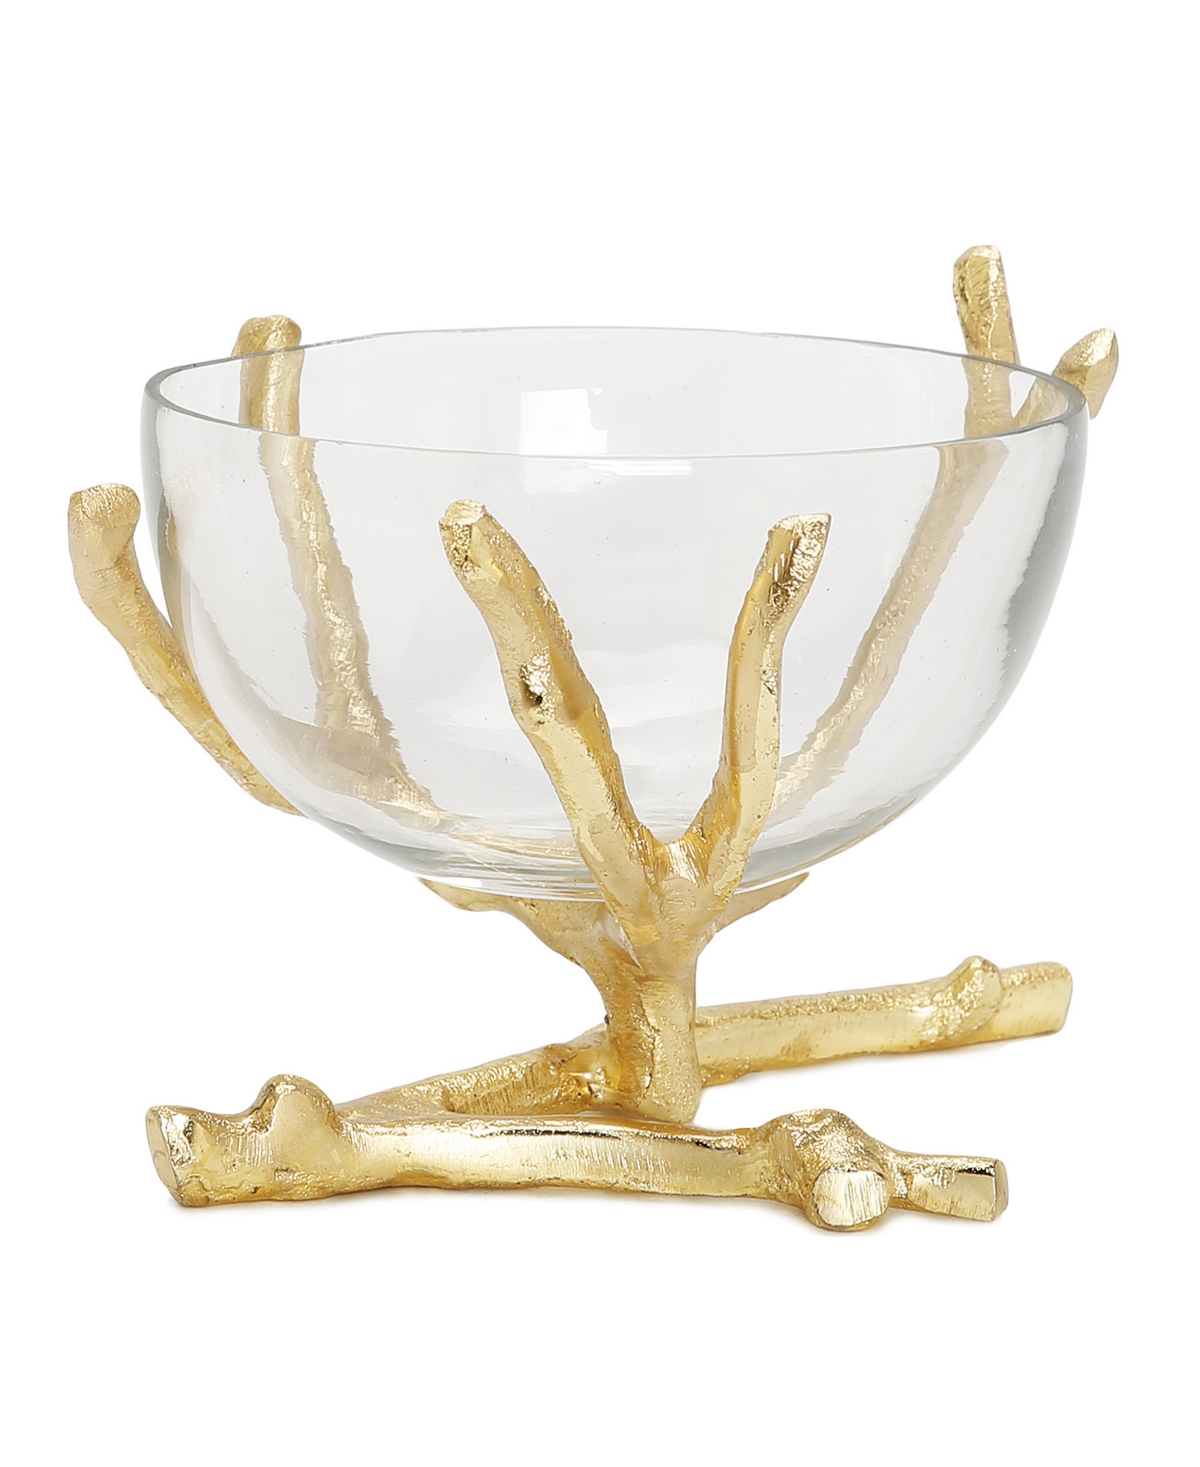 Twig Base Removable Glass Bowl, 6.5" x 5.5" - Gold-Tone